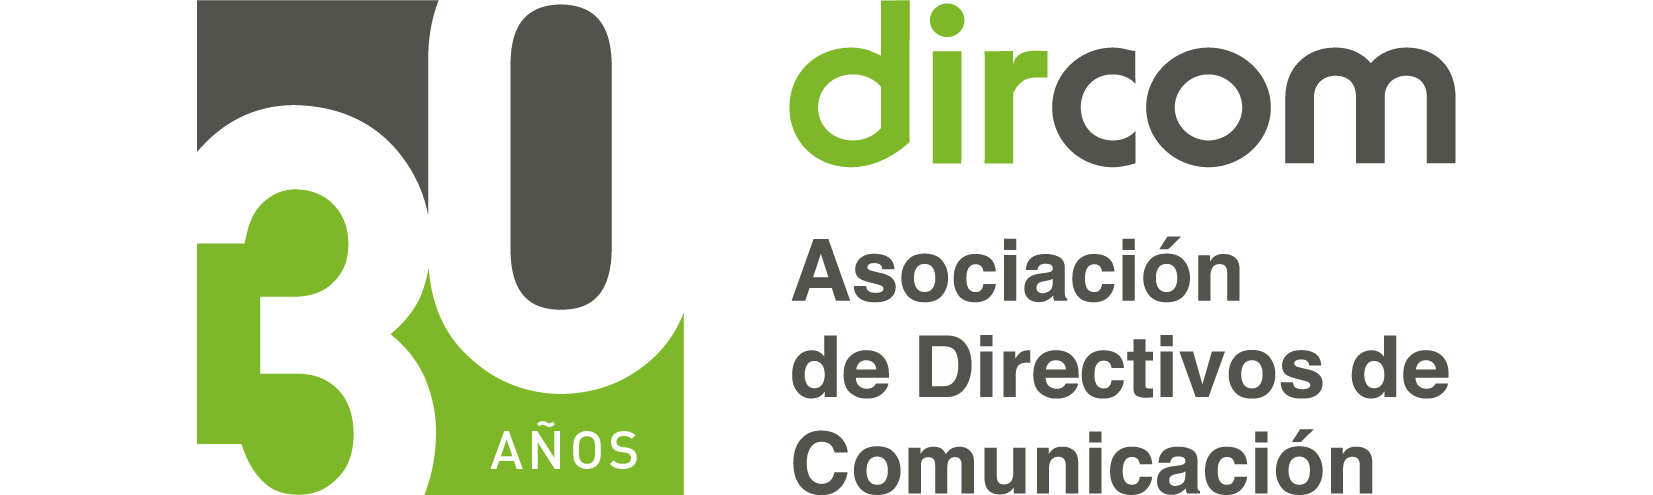 dircom logo empresa colaboradora con SecuriBath